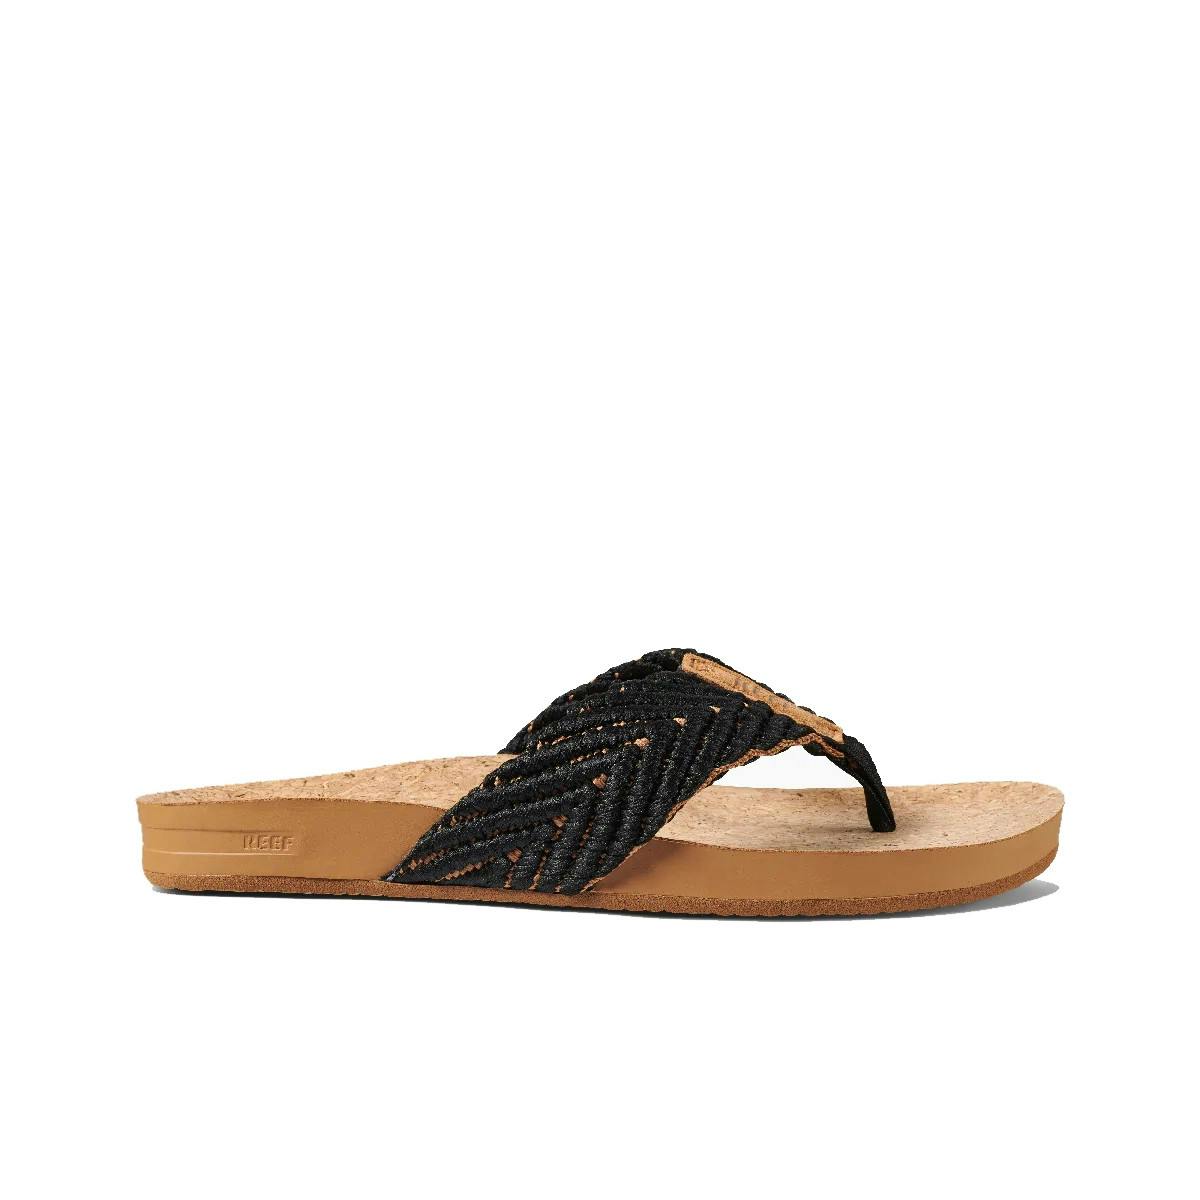 REEF Cushion Strand Sandals Side 2 - Black/Natural